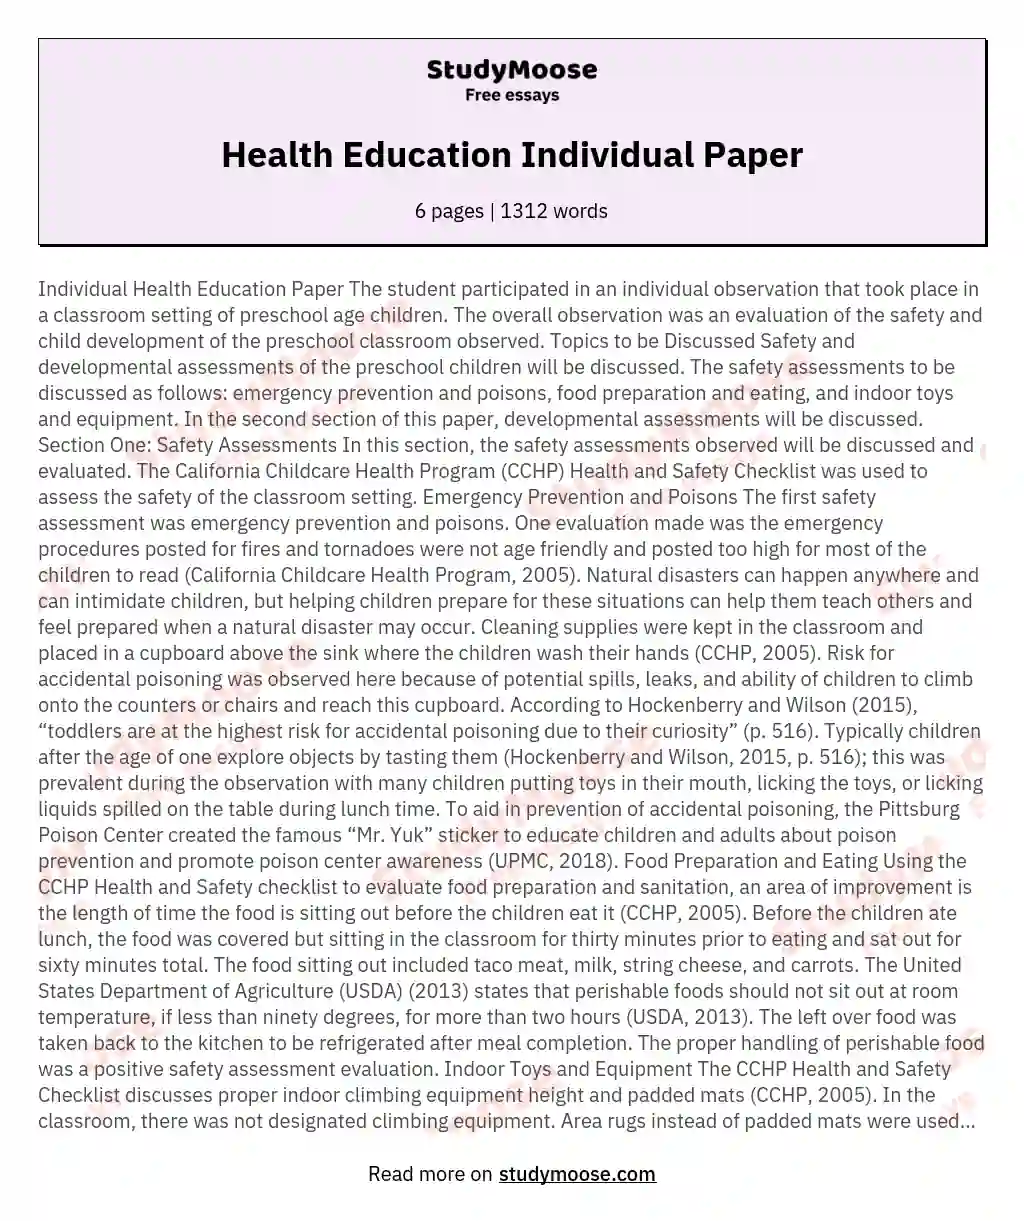 Health Education Individual Paper essay